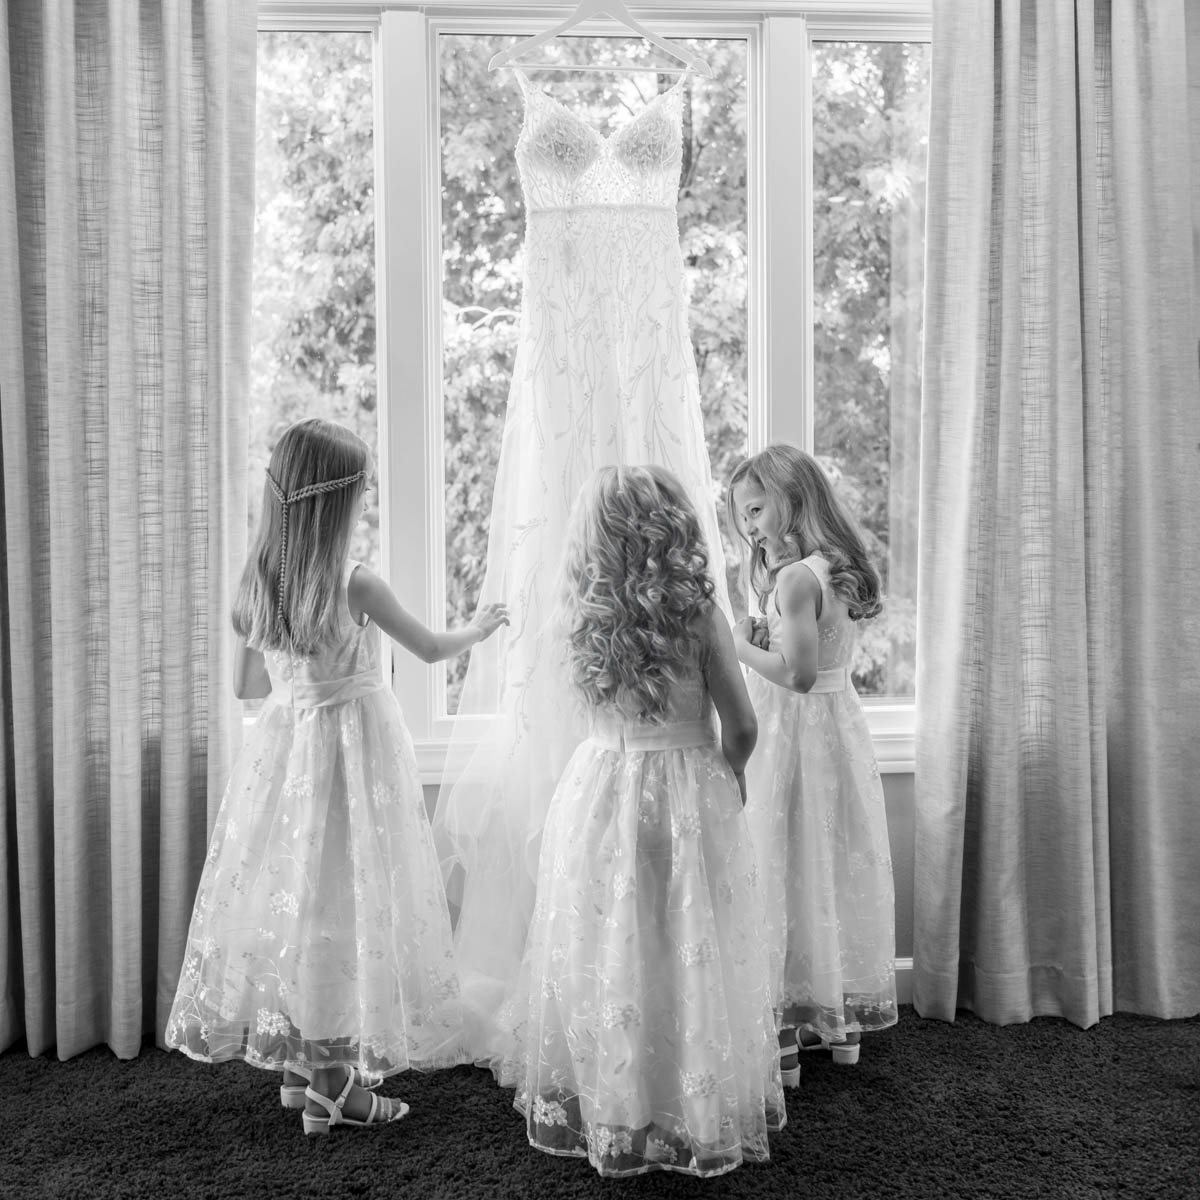 Flowergirls looking at a wedding dress by St. Louis Photographer Mitchell Bennett Photography